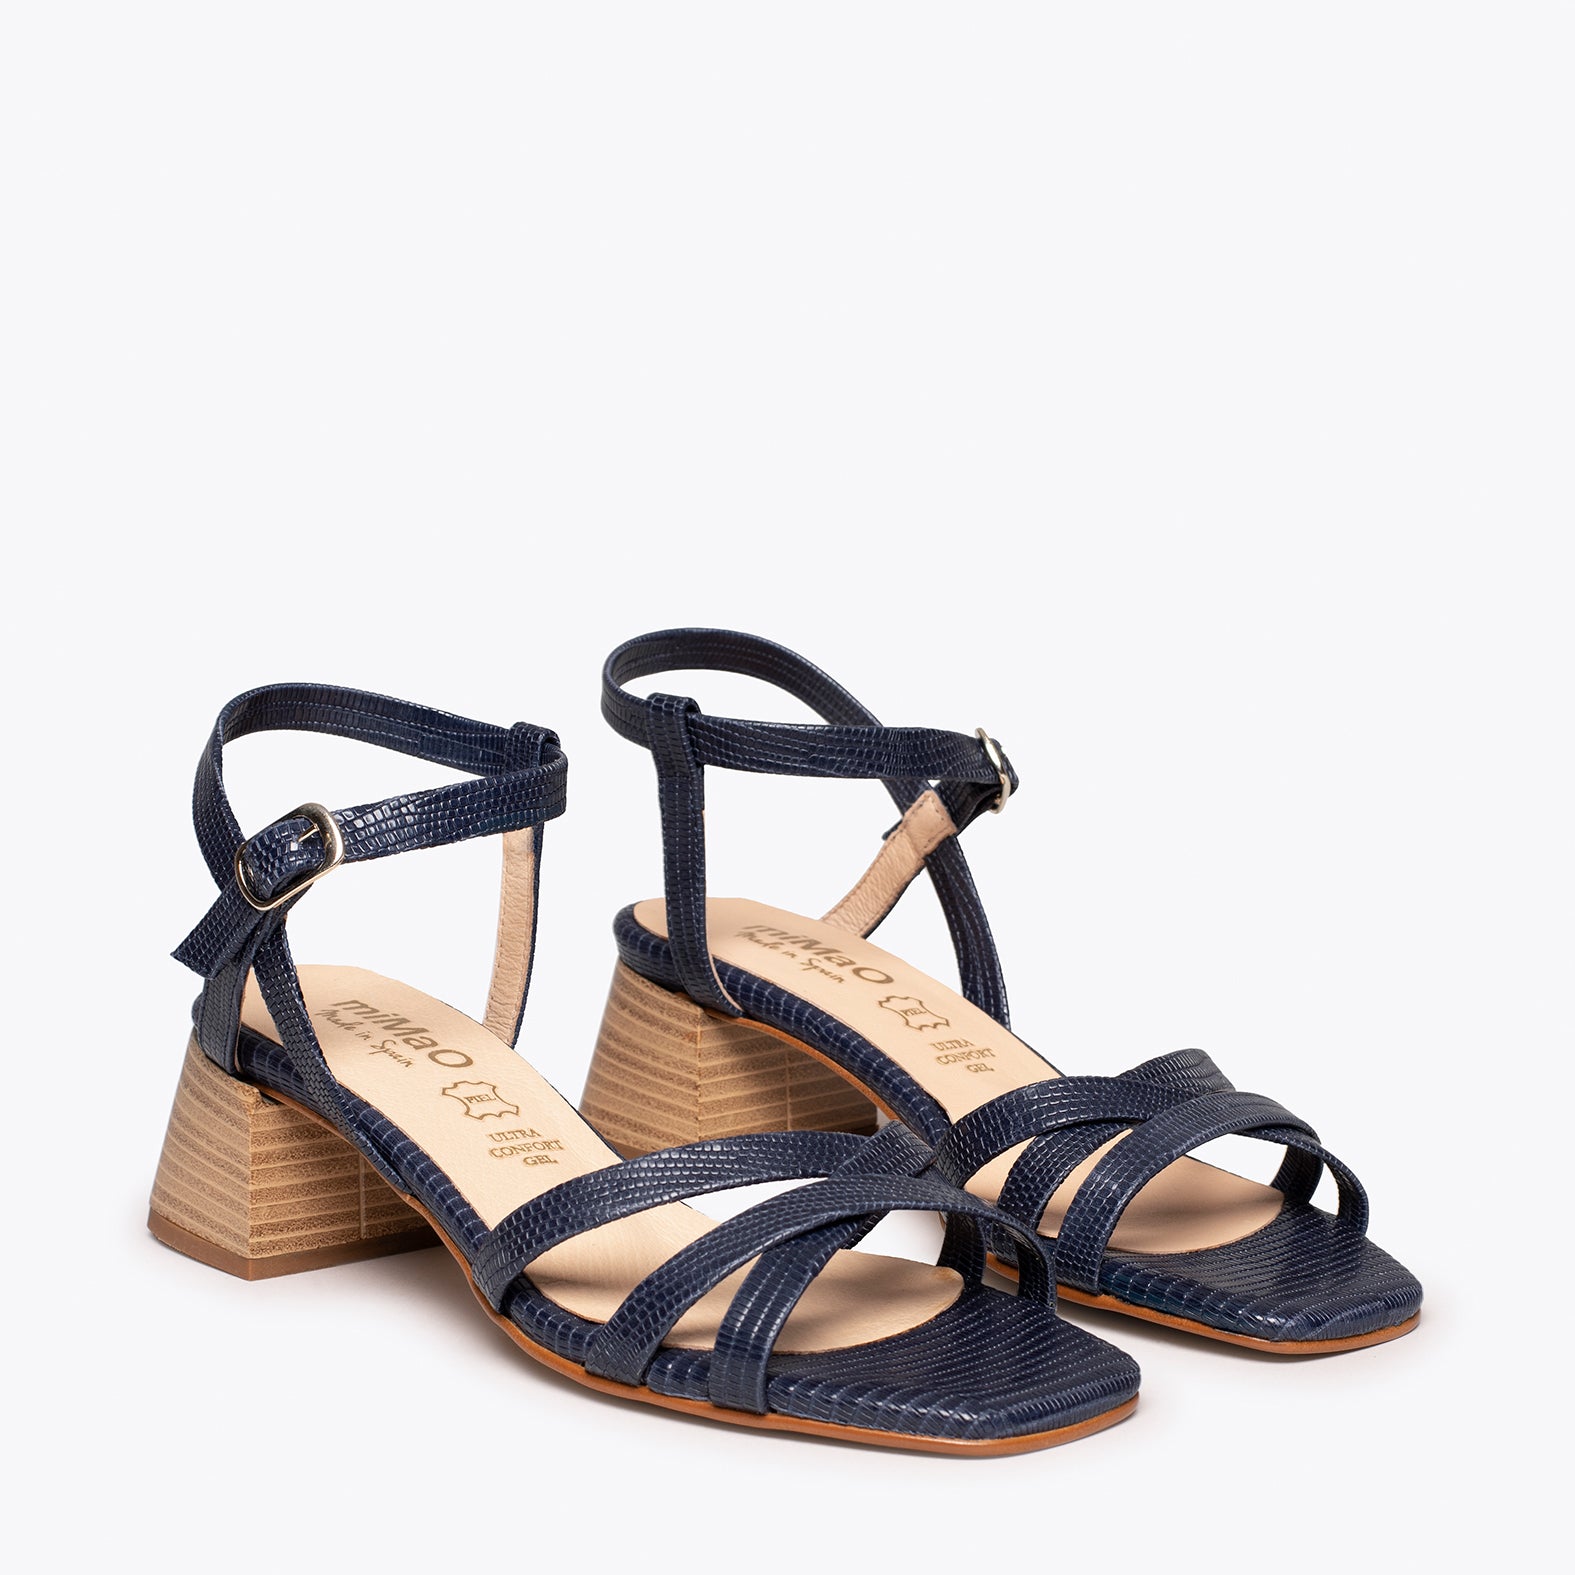 ELEGANT – NAVY mid heel sandal with snake texture